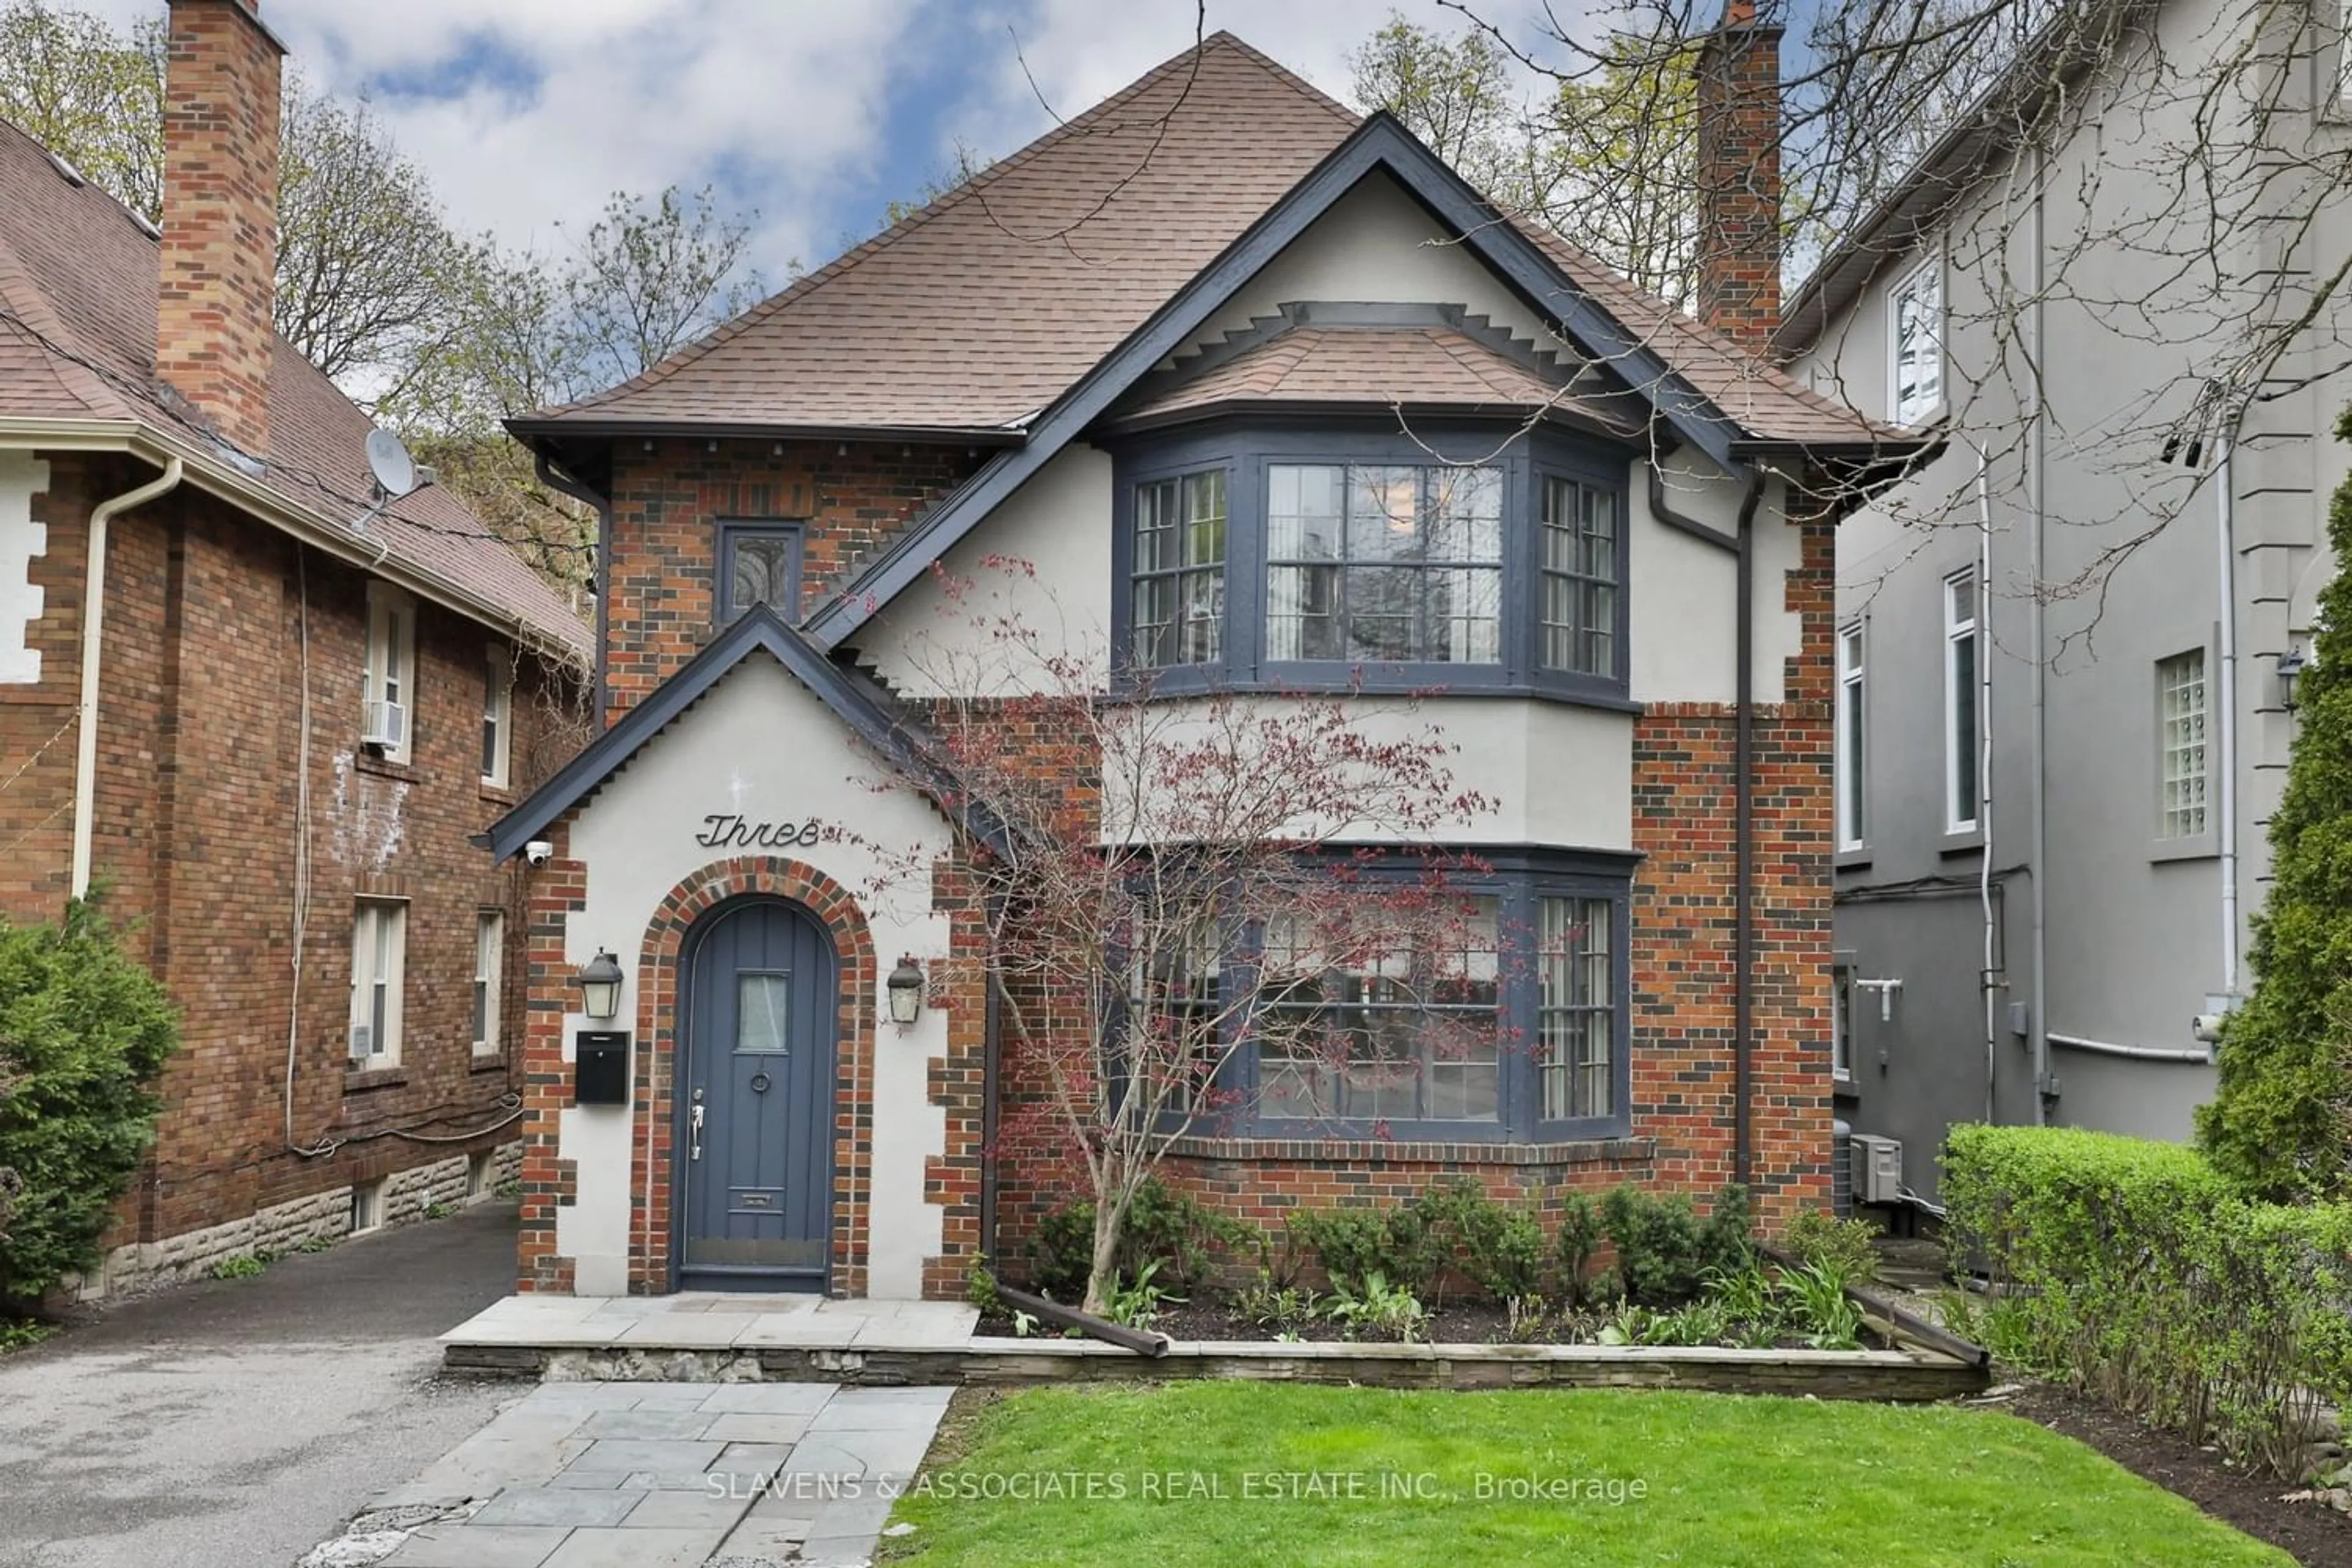 Home with brick exterior material for 3 Highbourne Rd, Toronto Ontario M5P 2J1